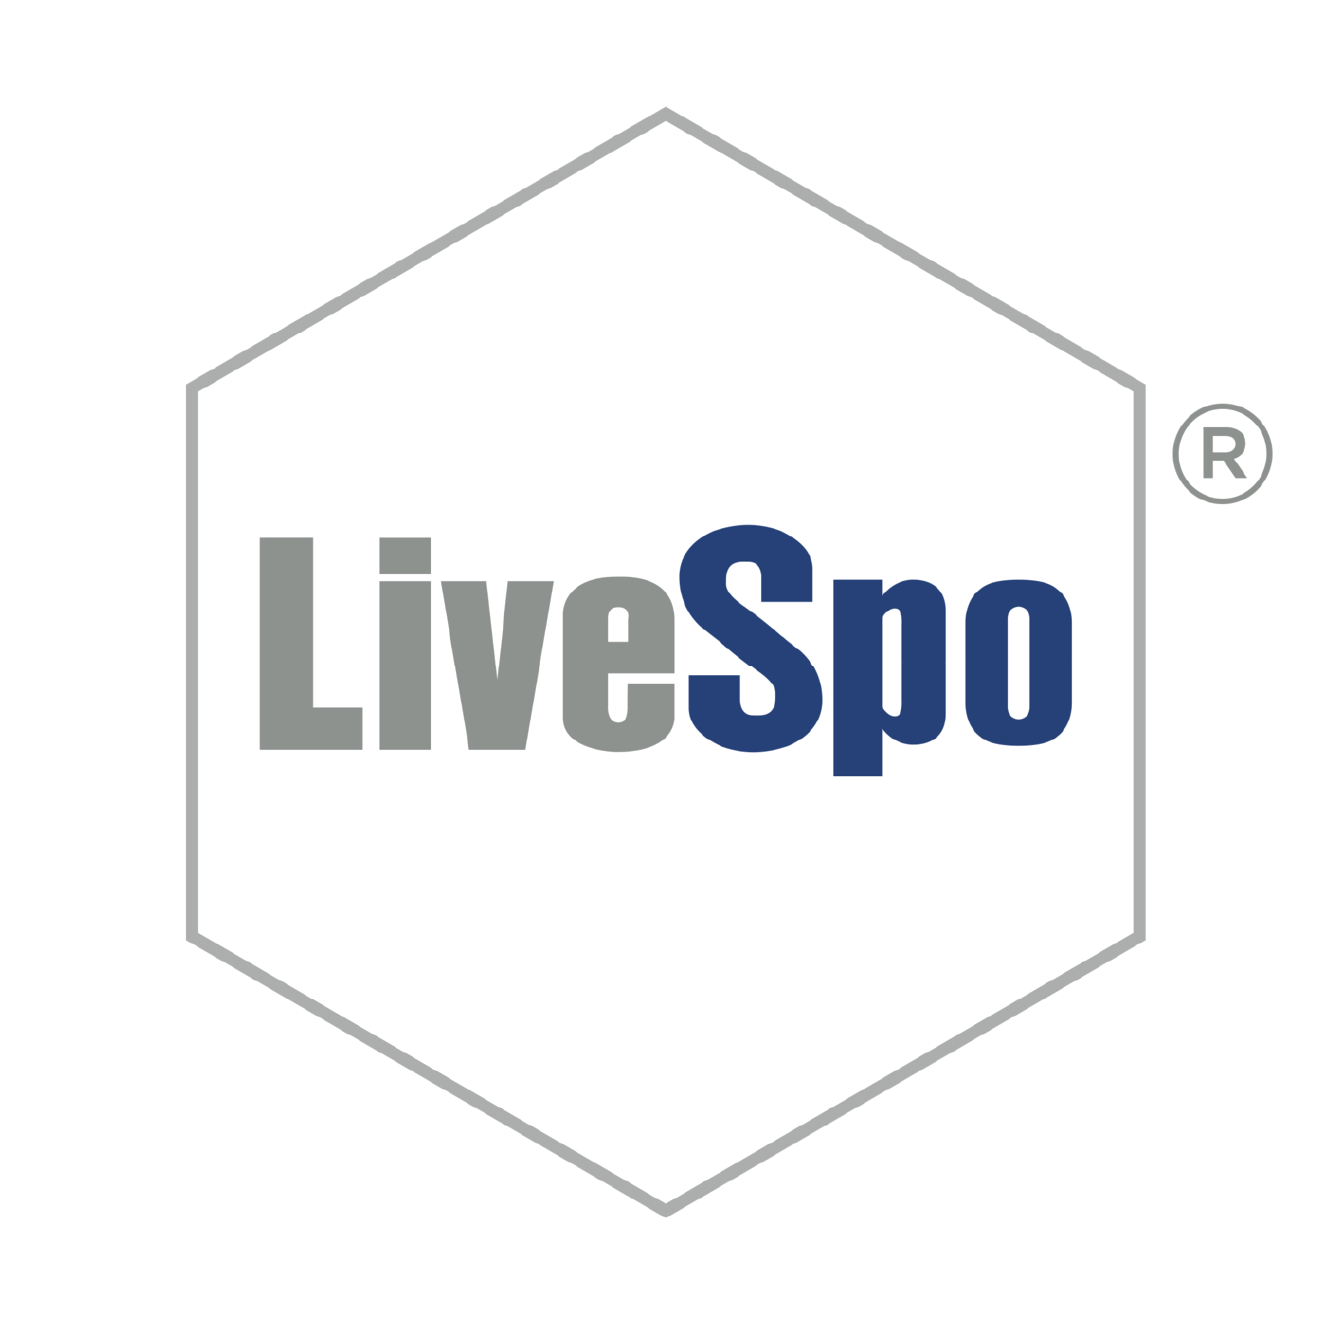 LiveSpo Official Store